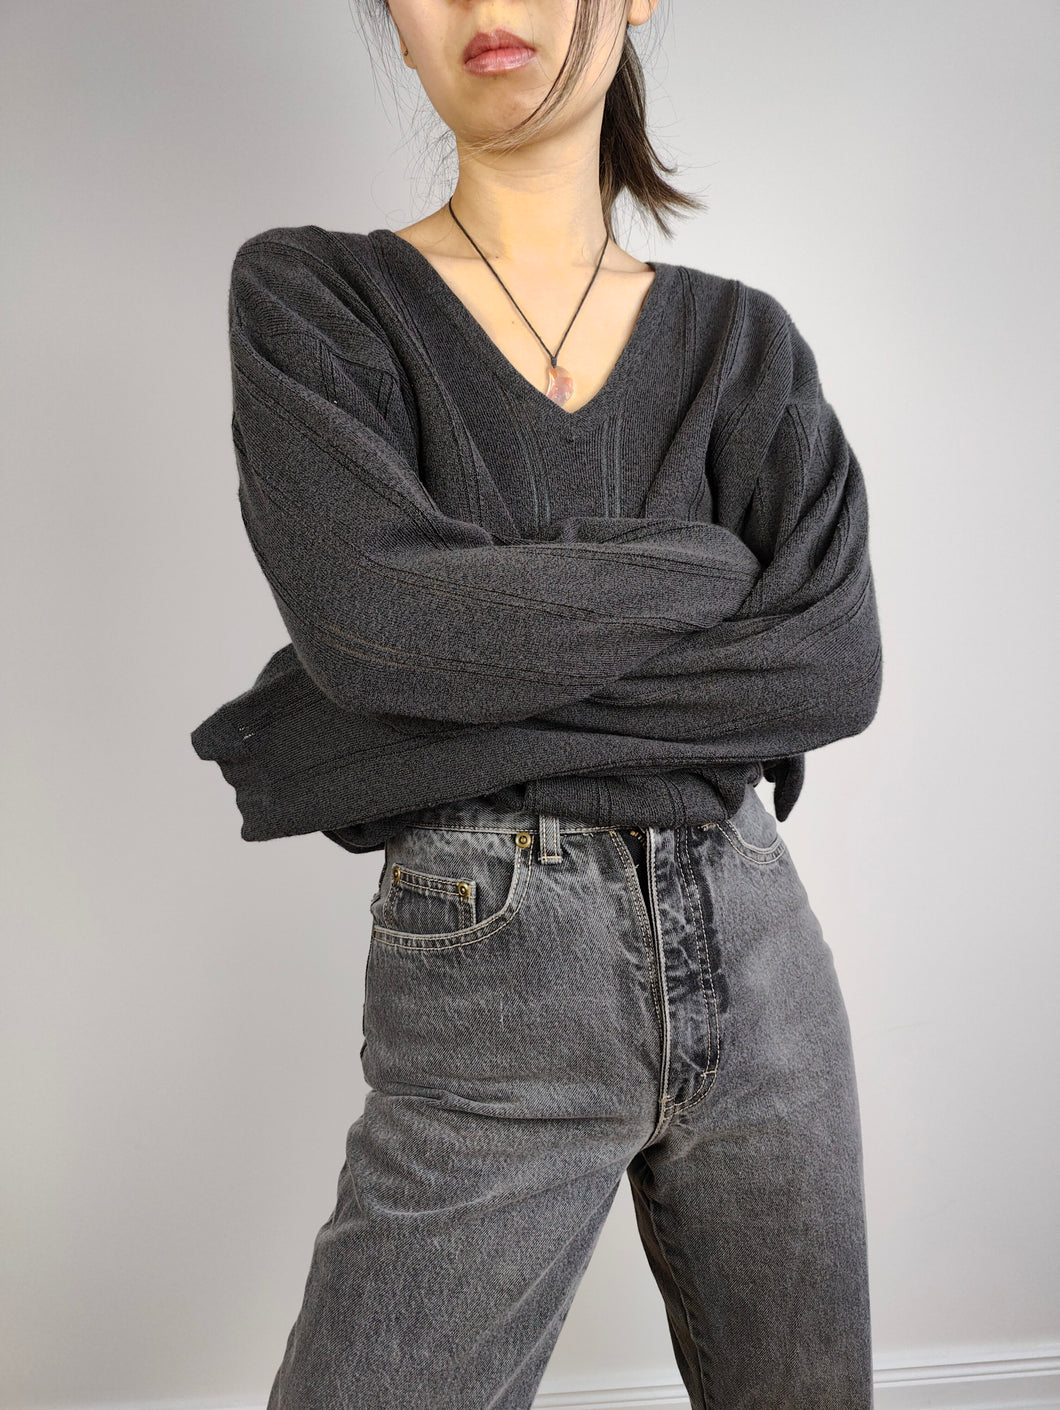 The Armani Jeans Grey Sweater | Vintage designer Armani Jeans cotton mix knit knitted pullover jumper gray V-neck Italian unisex men women M-L